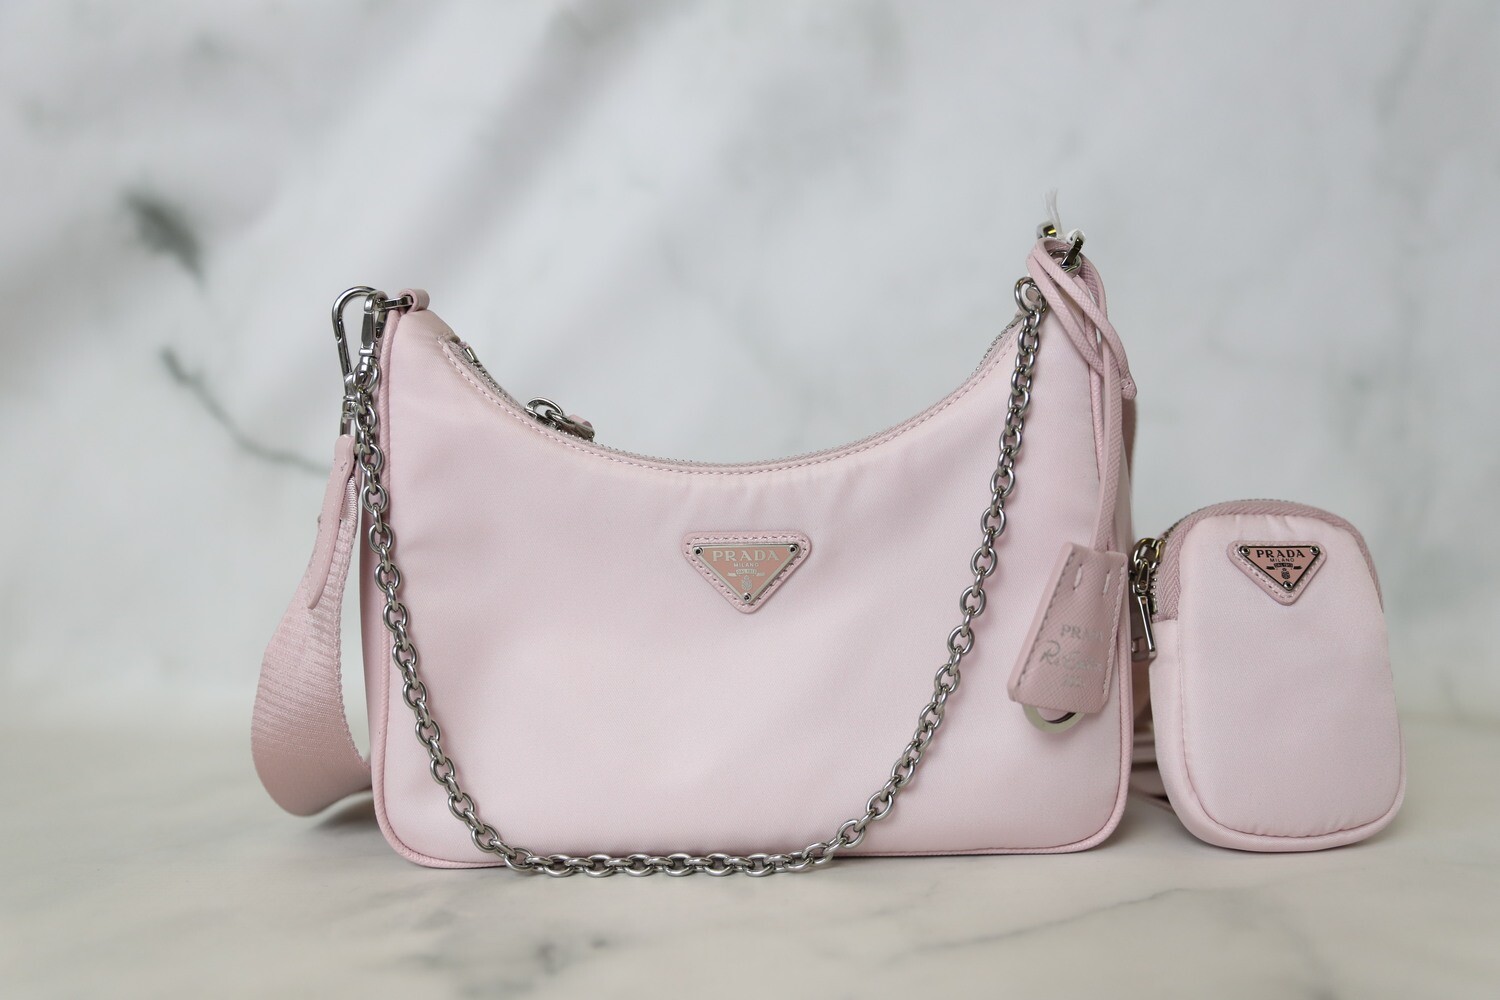 Prada Pink Nylon Re-Edition 2005 Shoulder Bag Prada